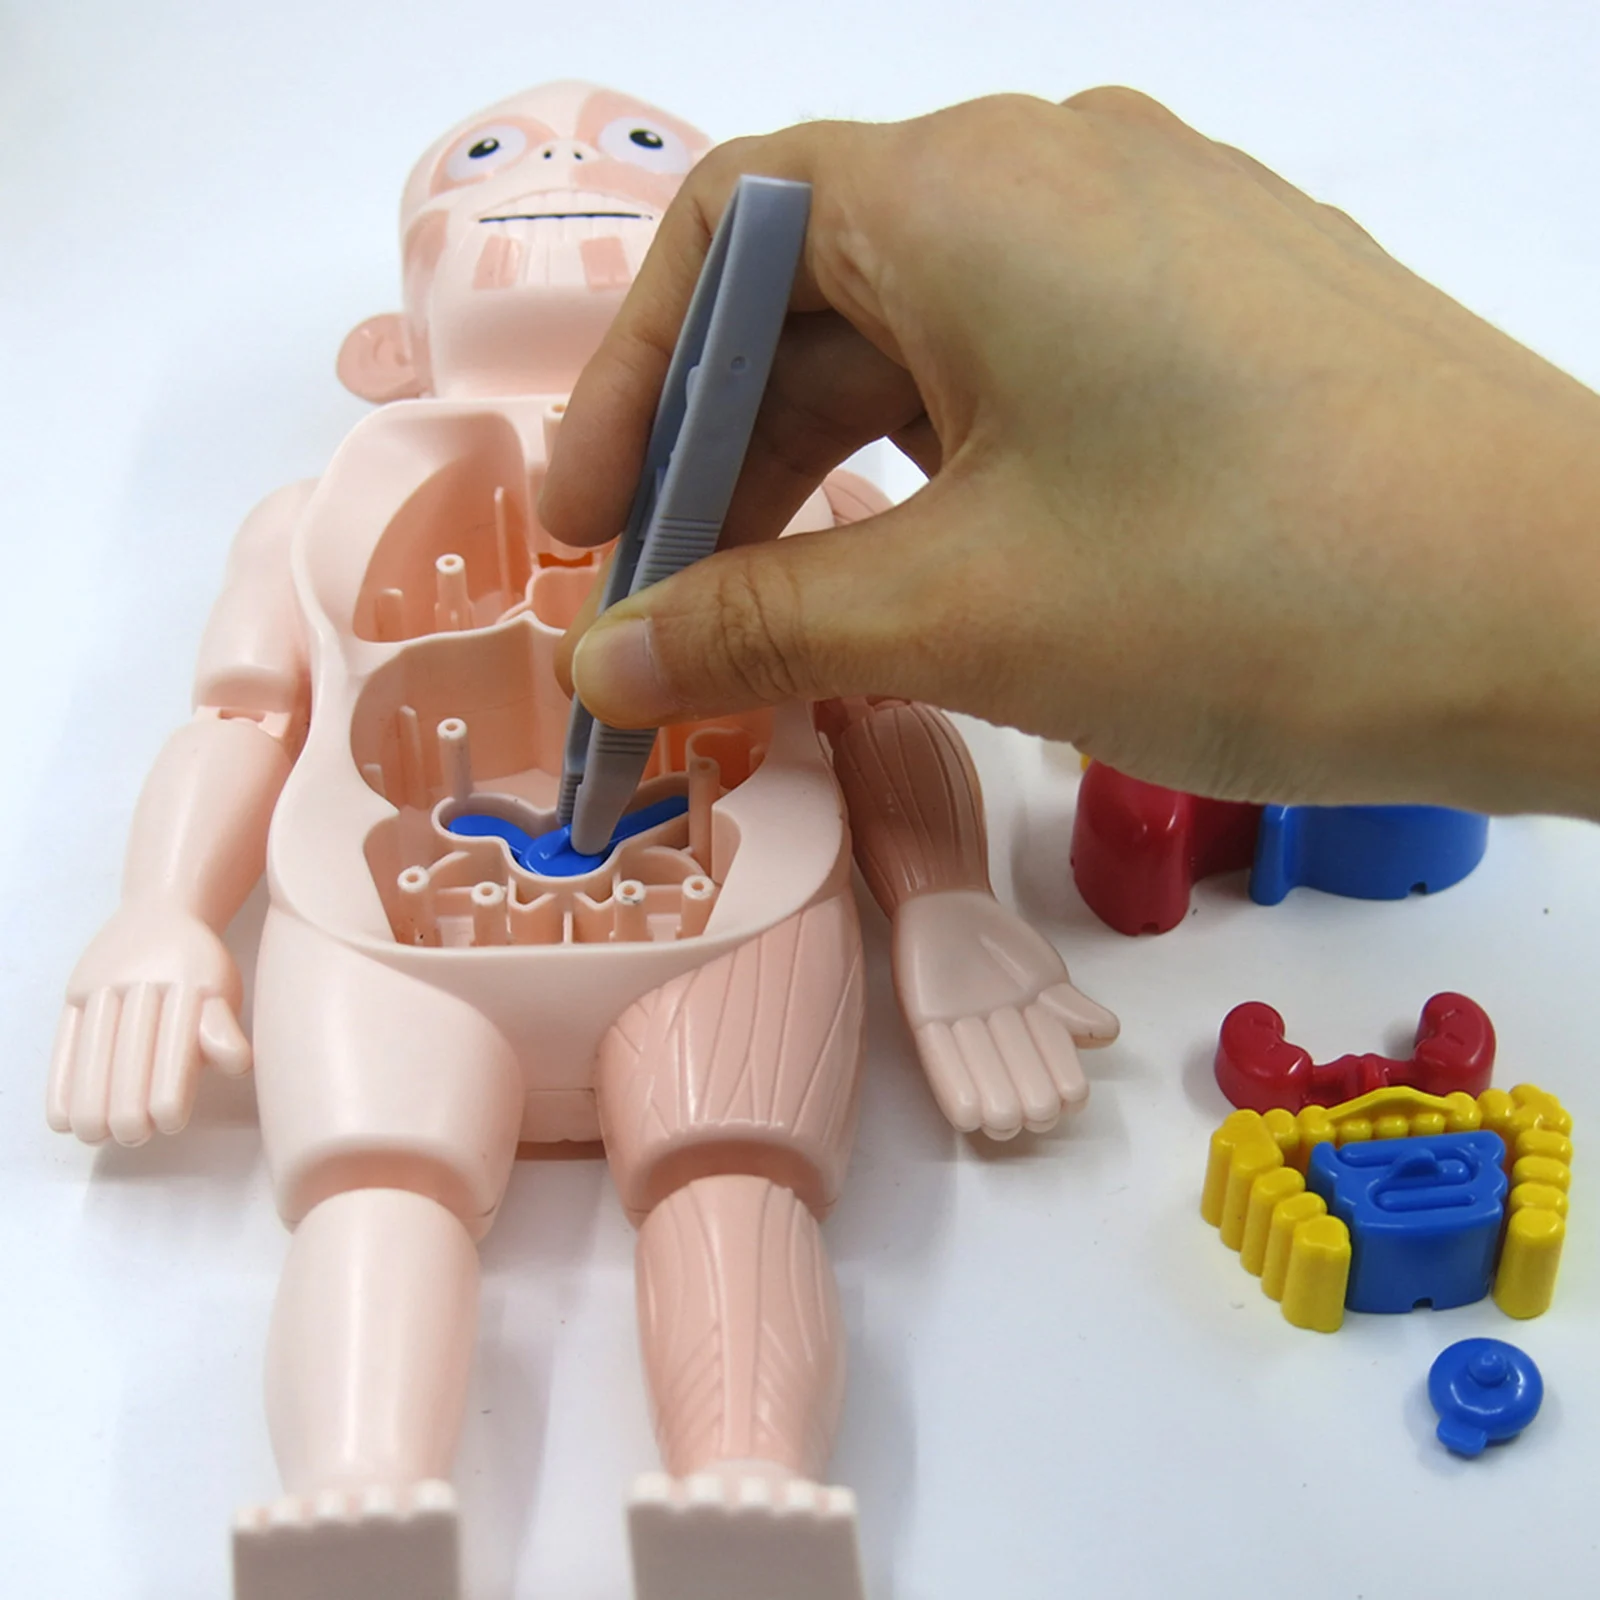 3D Human Body Anatomy Toys Model Kits Plastic for Study Human Organs 9.5x6x24cm